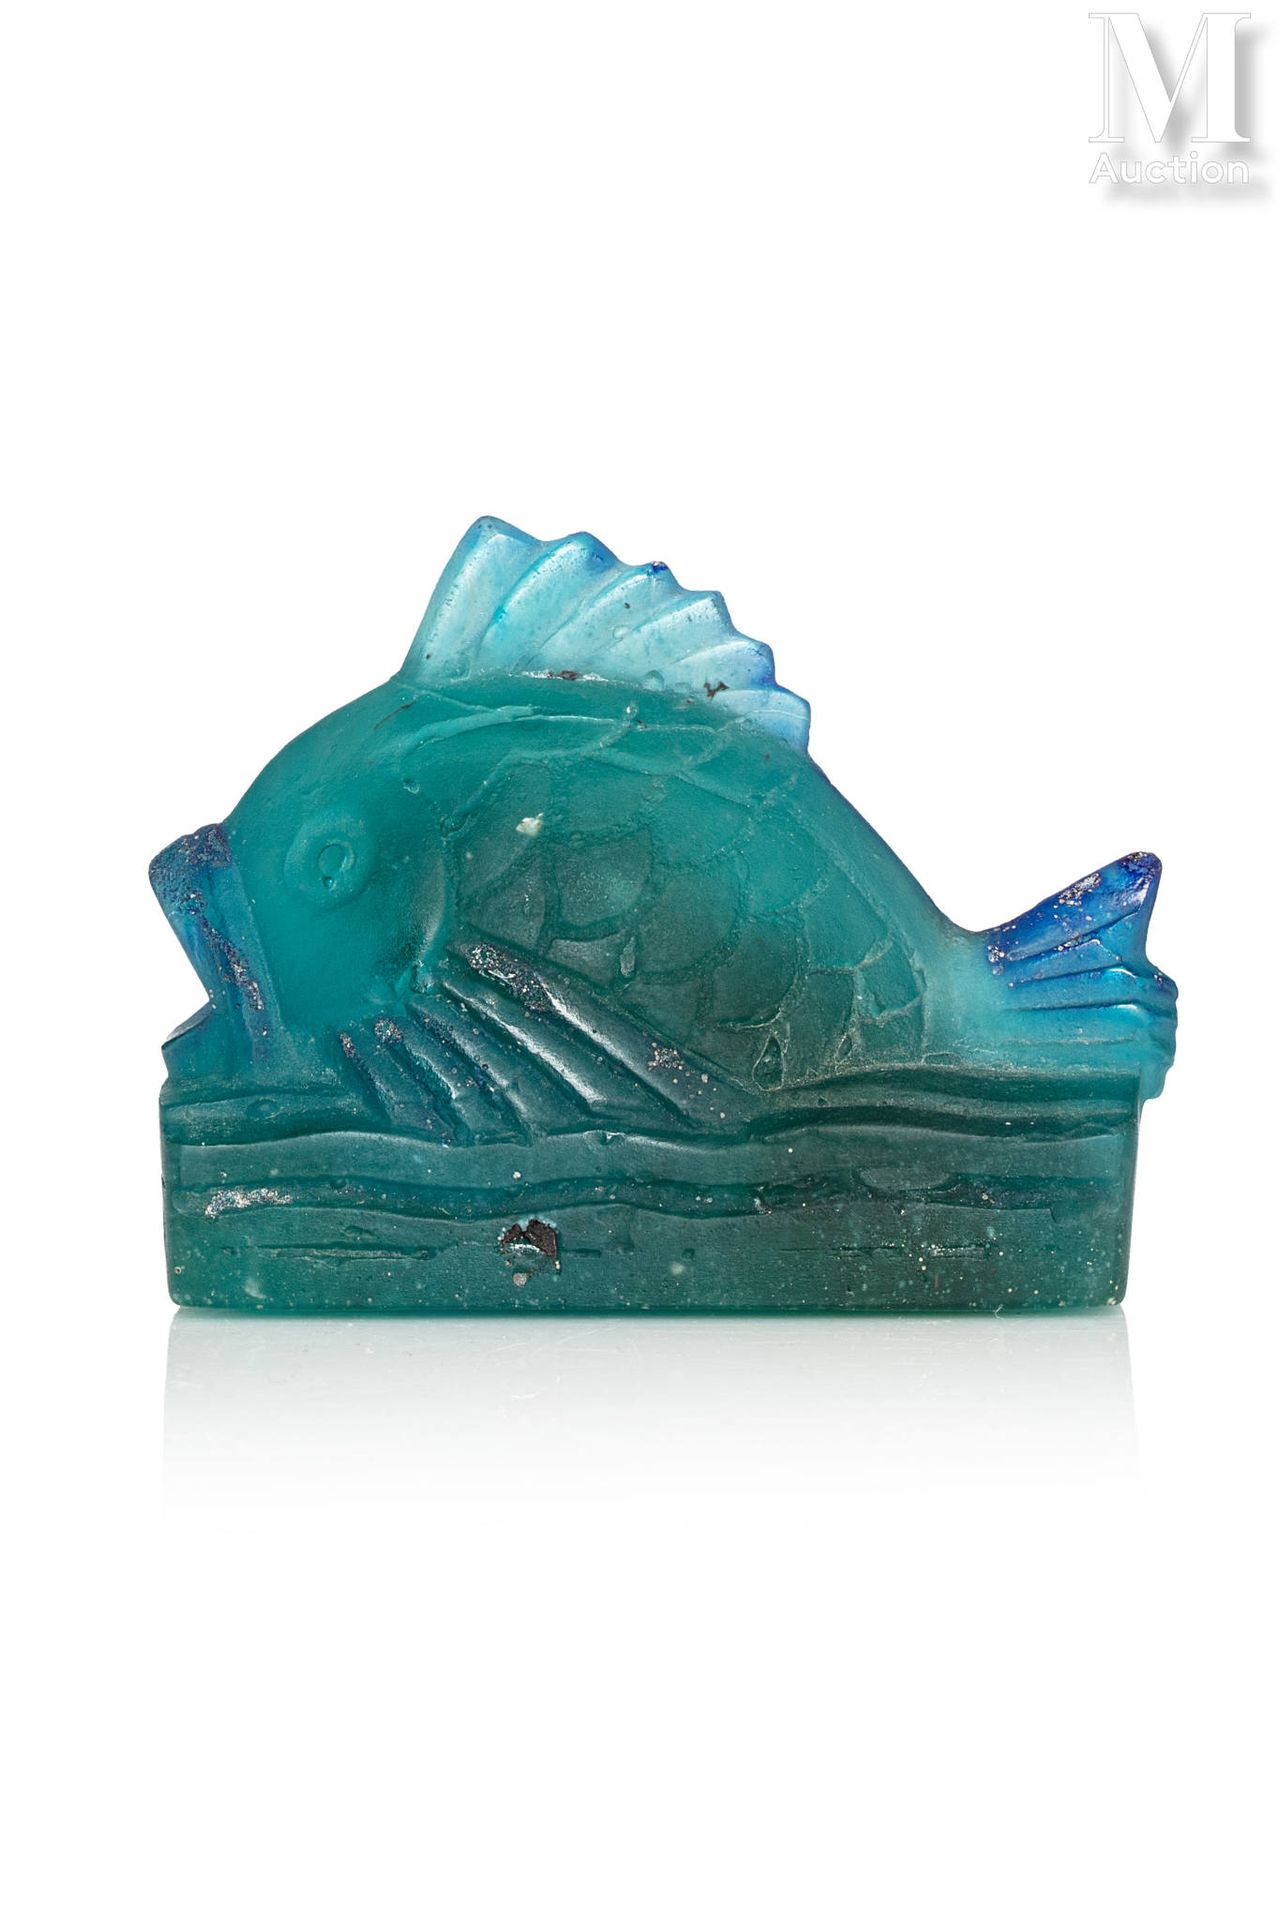 Amalric WALTER (1870 - 1959) 玻璃浆雕塑，表现一条从水中浮出的鱼，色彩强烈的蓝色和绿色。

签名为 "A.基座上的 "沃尔特"。

&hellip;